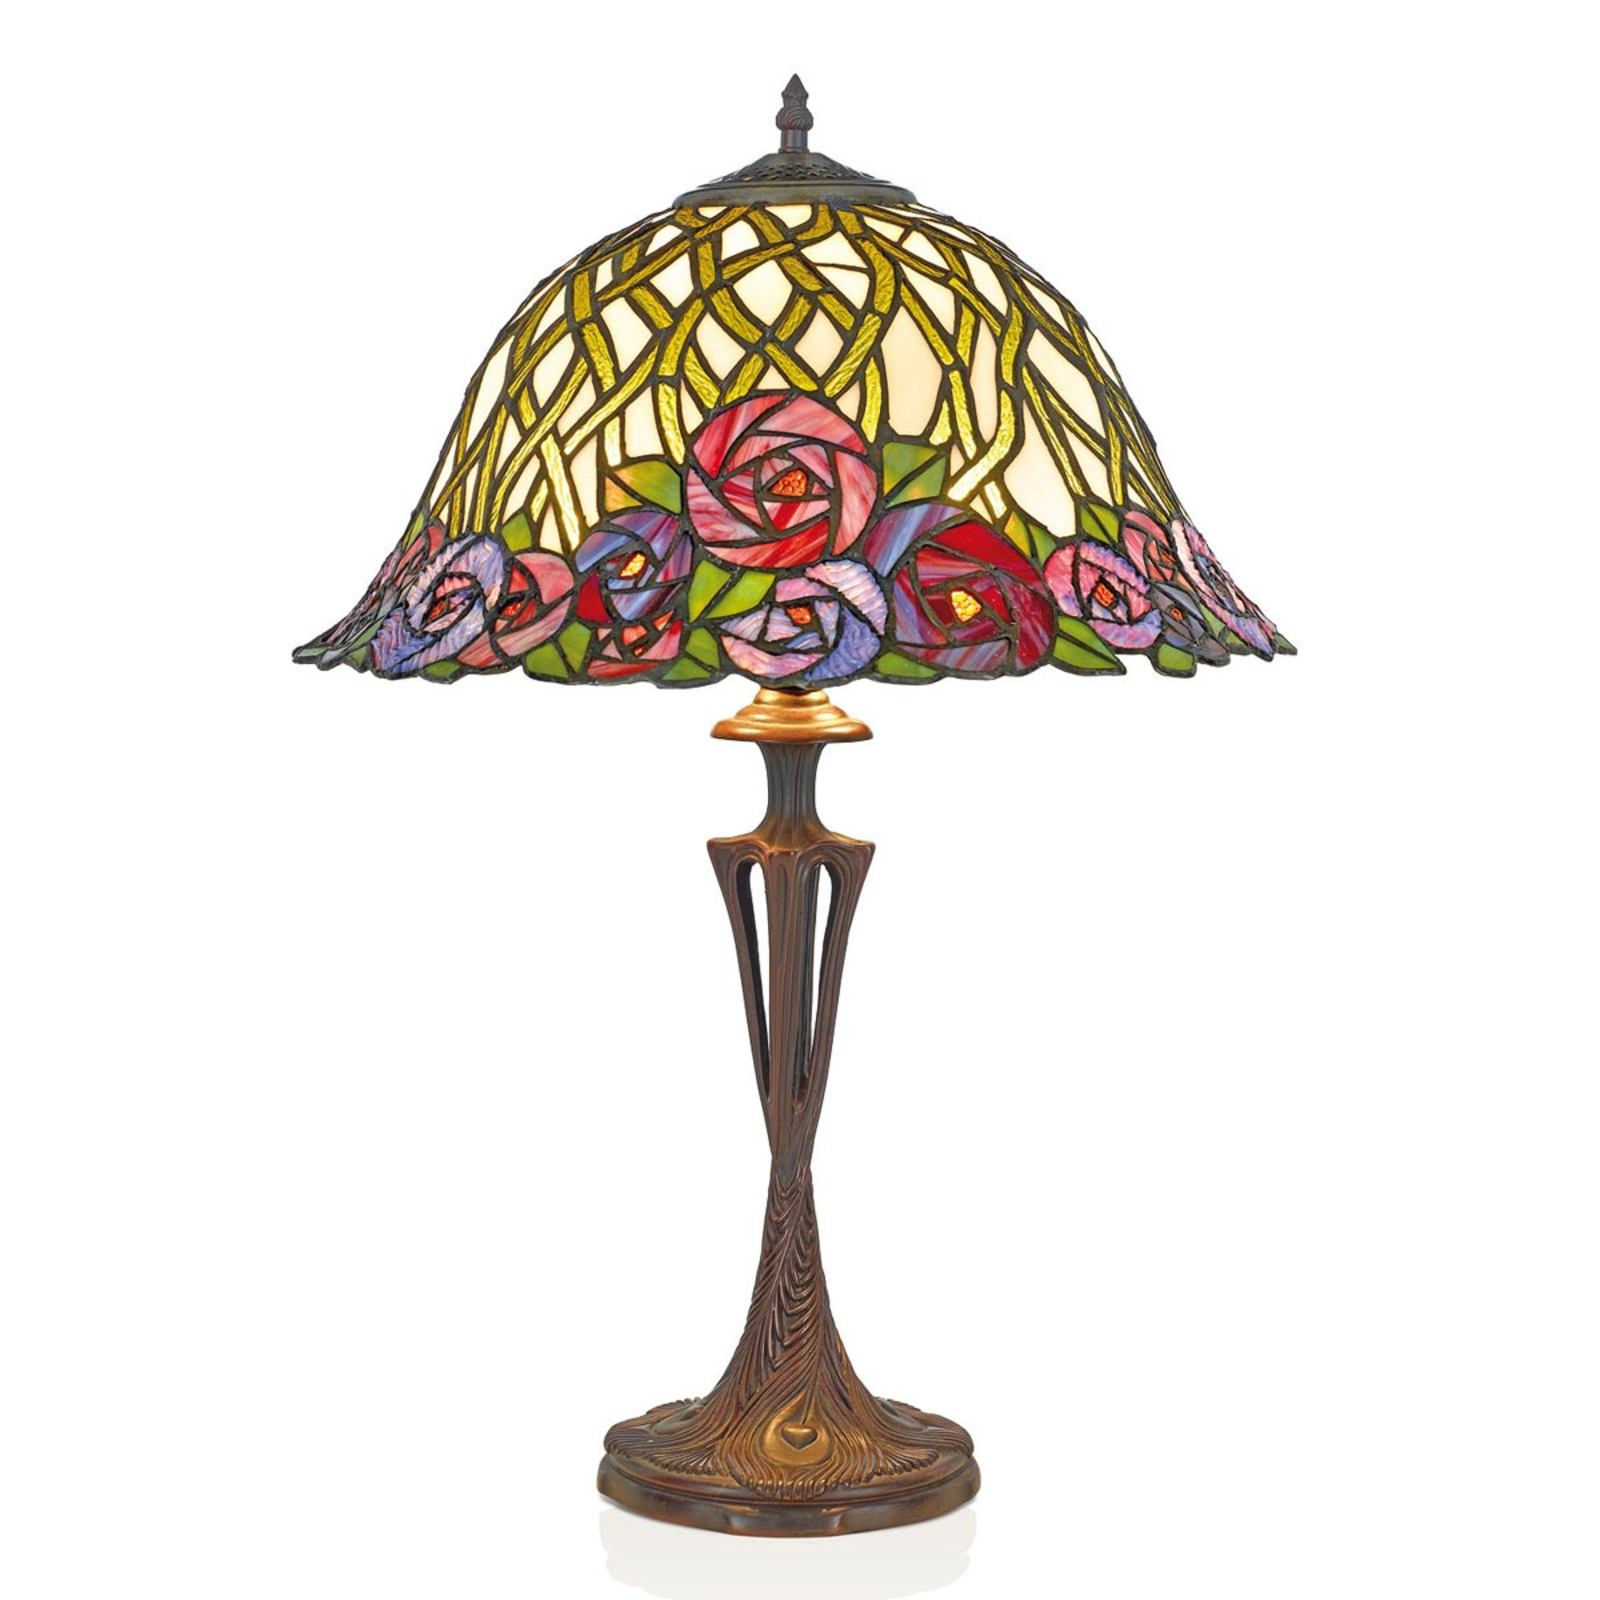 Melika table lamp in Tiffany style